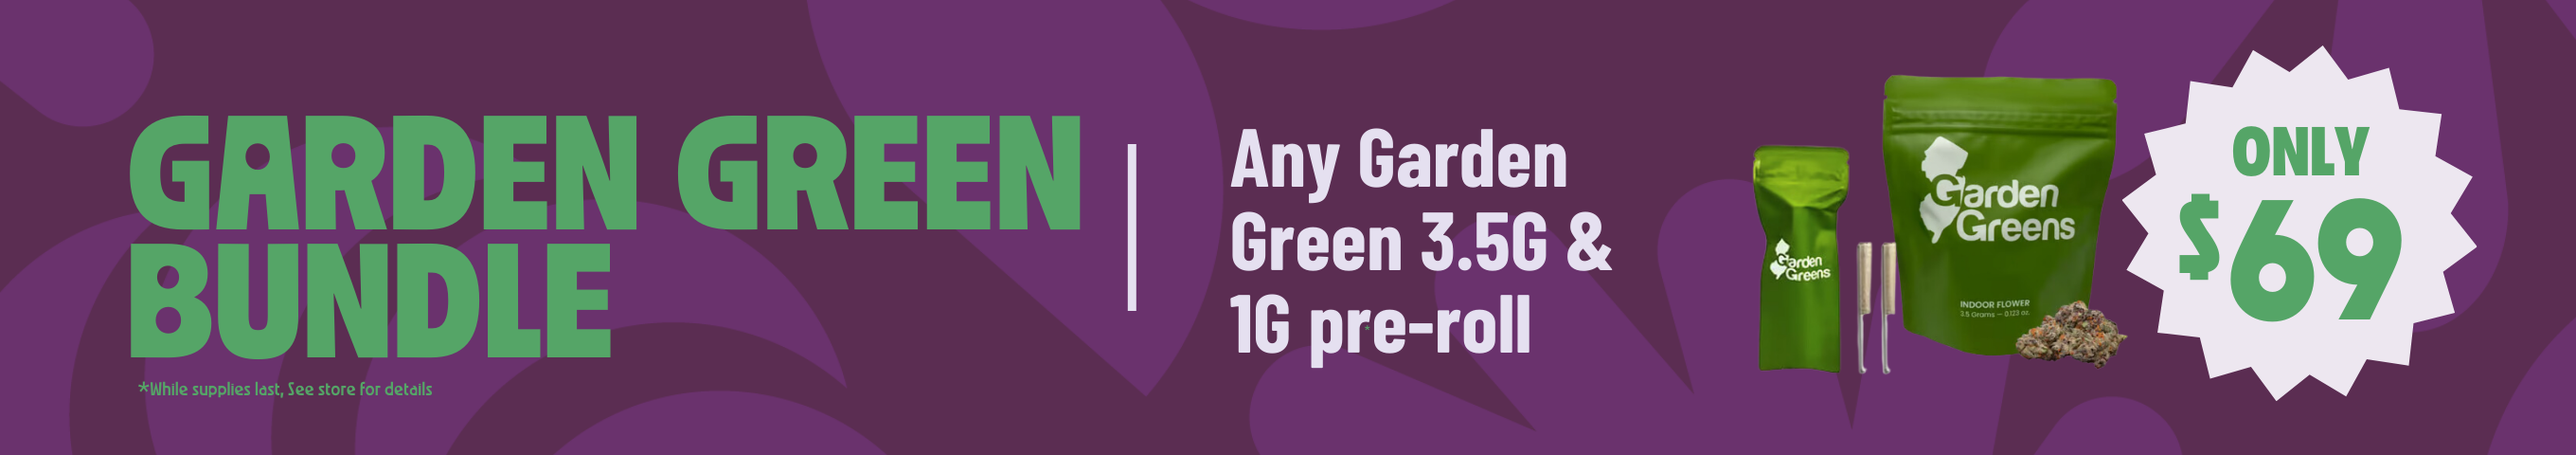 Cannabis Promo, Cannabis Sales, Cannabis Discounts, Cannabis on Sale, $69 Garden Greens Bundle 3.5G Flower + 1G Pre-Roll